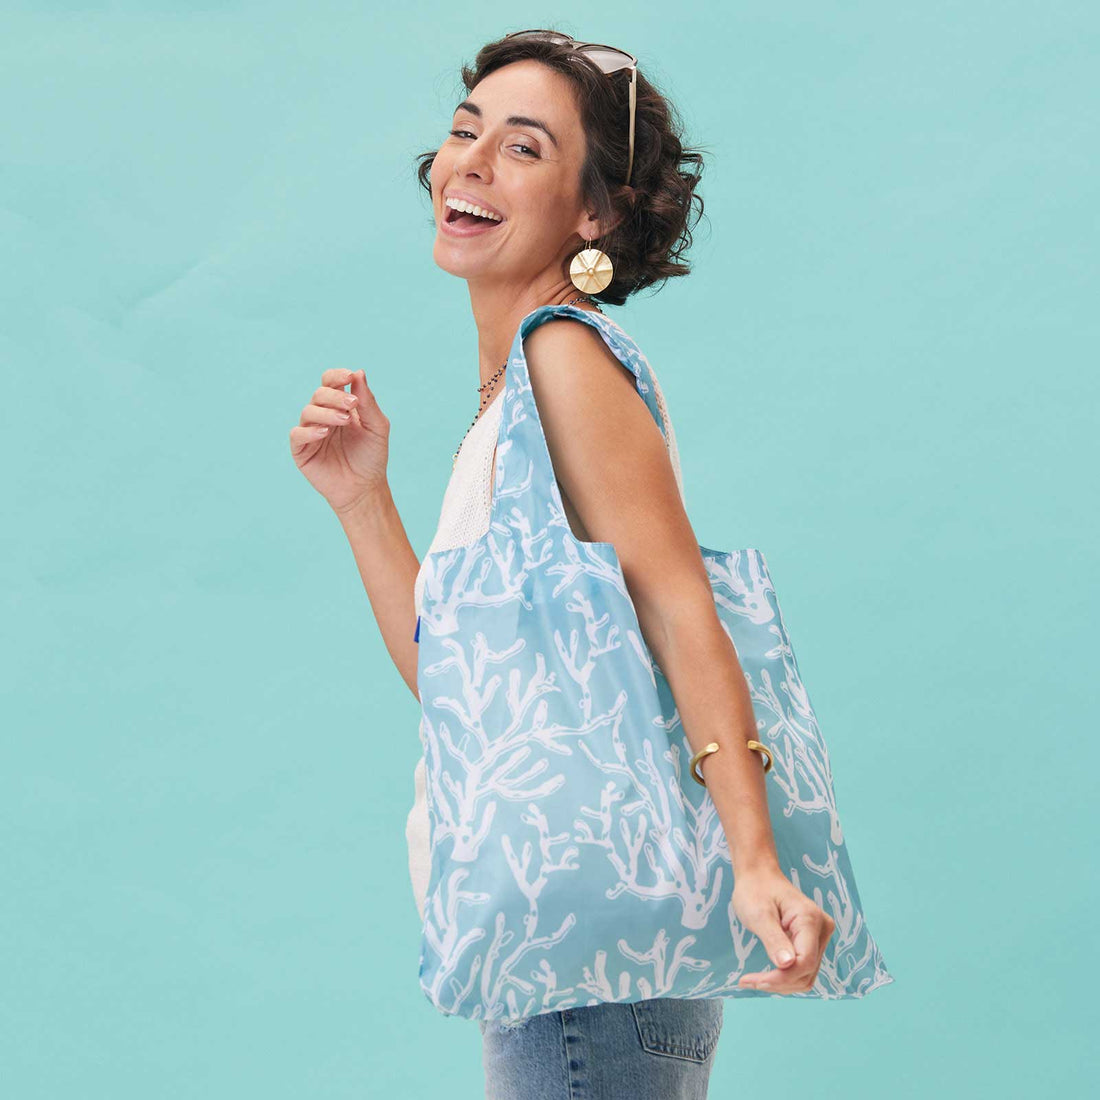 Cerulean Sea Coral Blu Bag Reusable Shopping Bag - Machine Washable Reusable Shopping Bag - rockflowerpaper